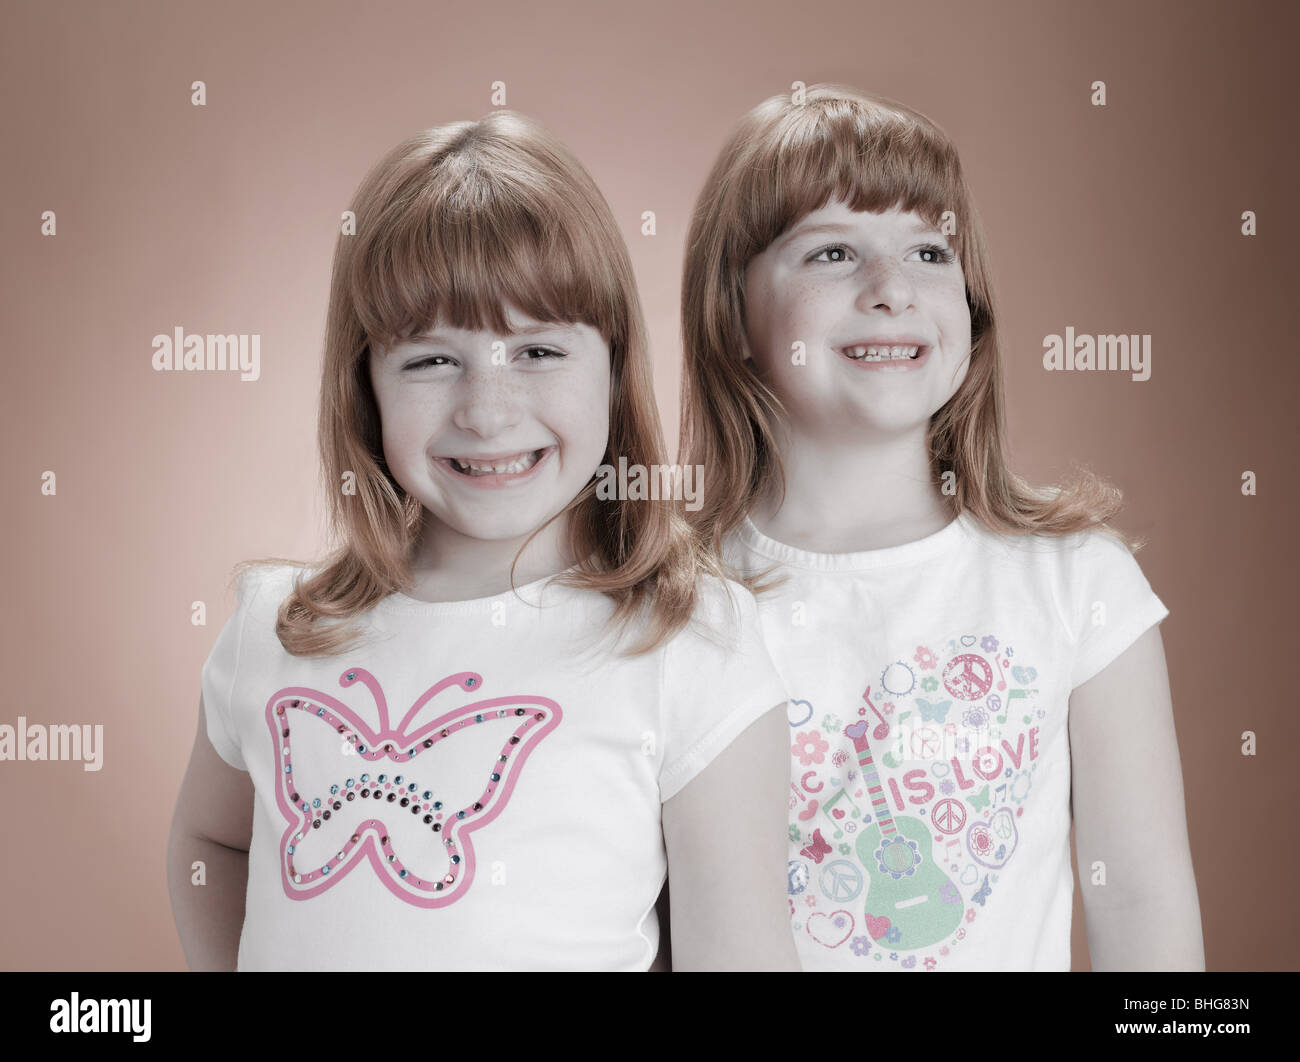 Identical twin girls Stock Photo